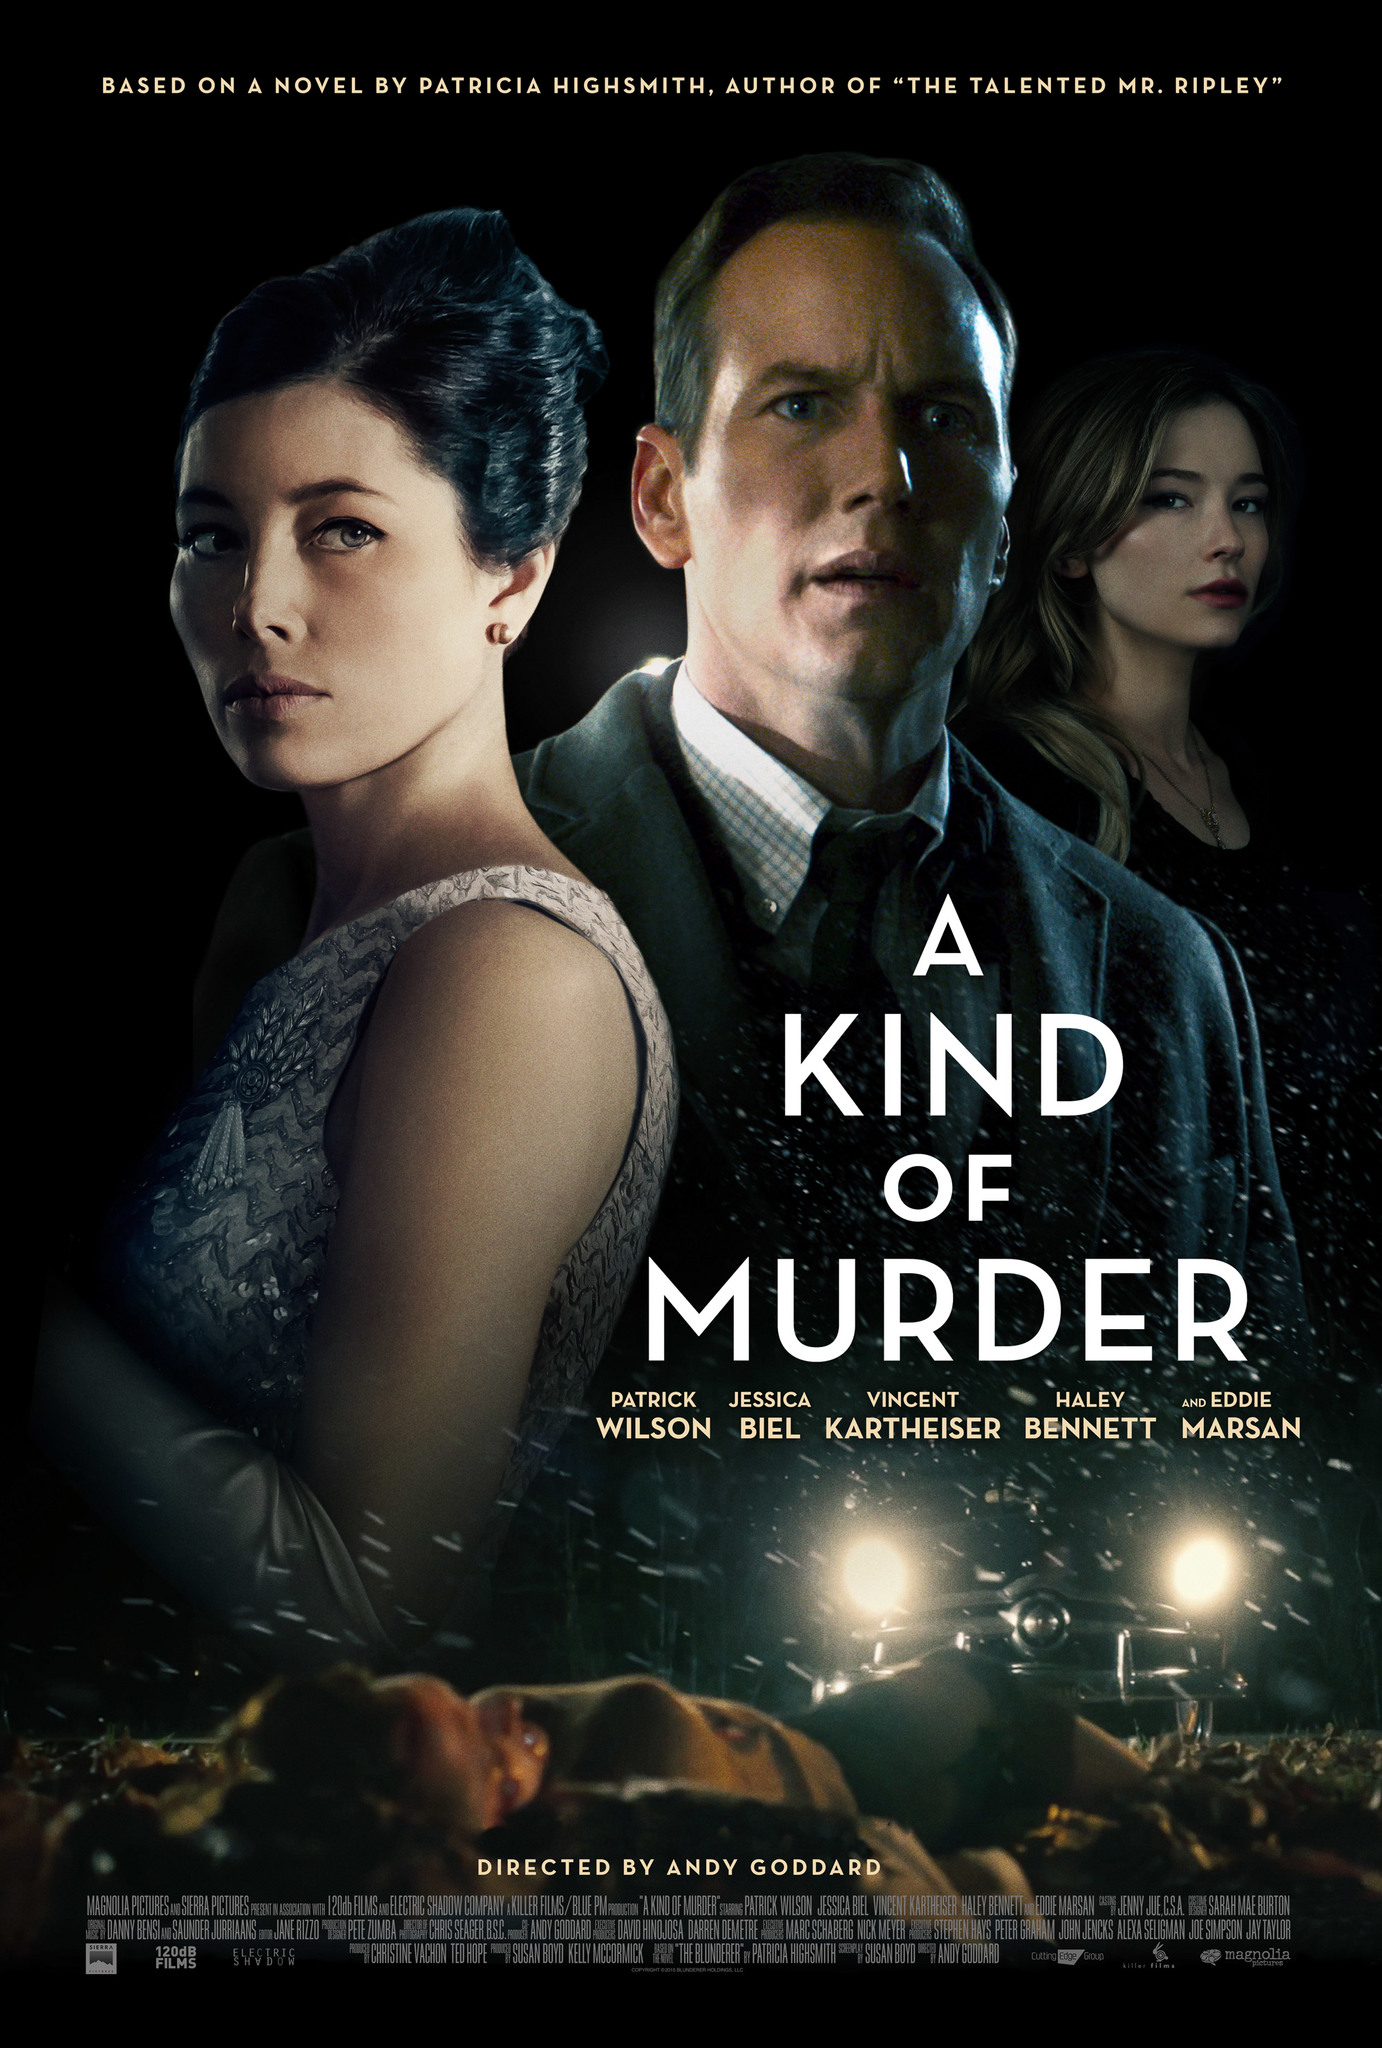 Nonton film A Kind of Murder layarkaca21 indoxx1 ganool online streaming terbaru